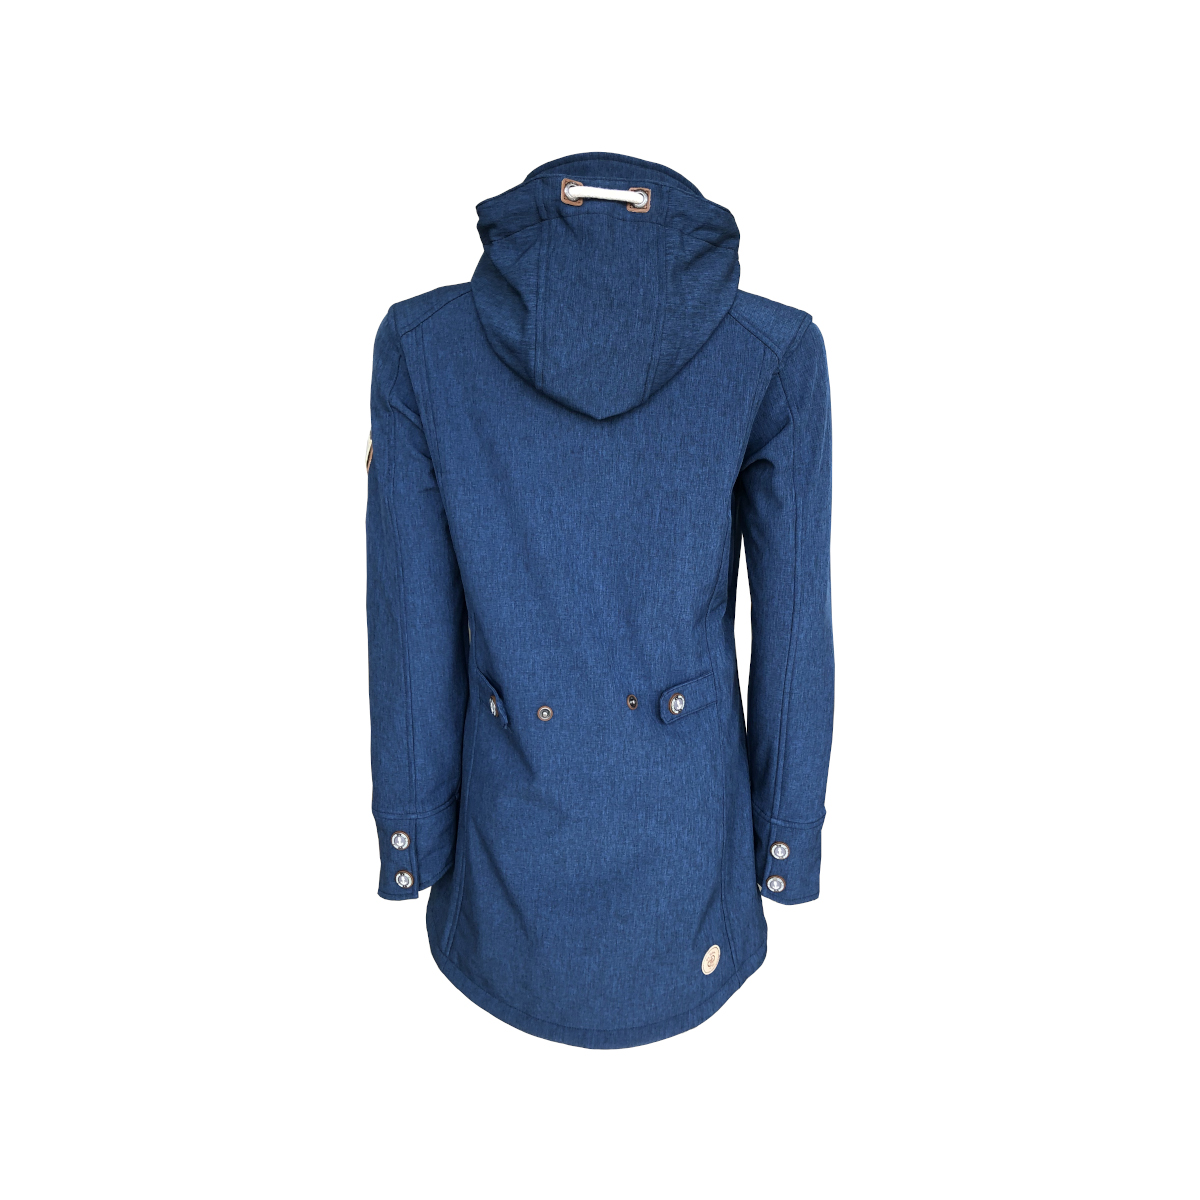 Dry Fashion Sellin Manteau Softshell femme bleu marine chiné, taille 38